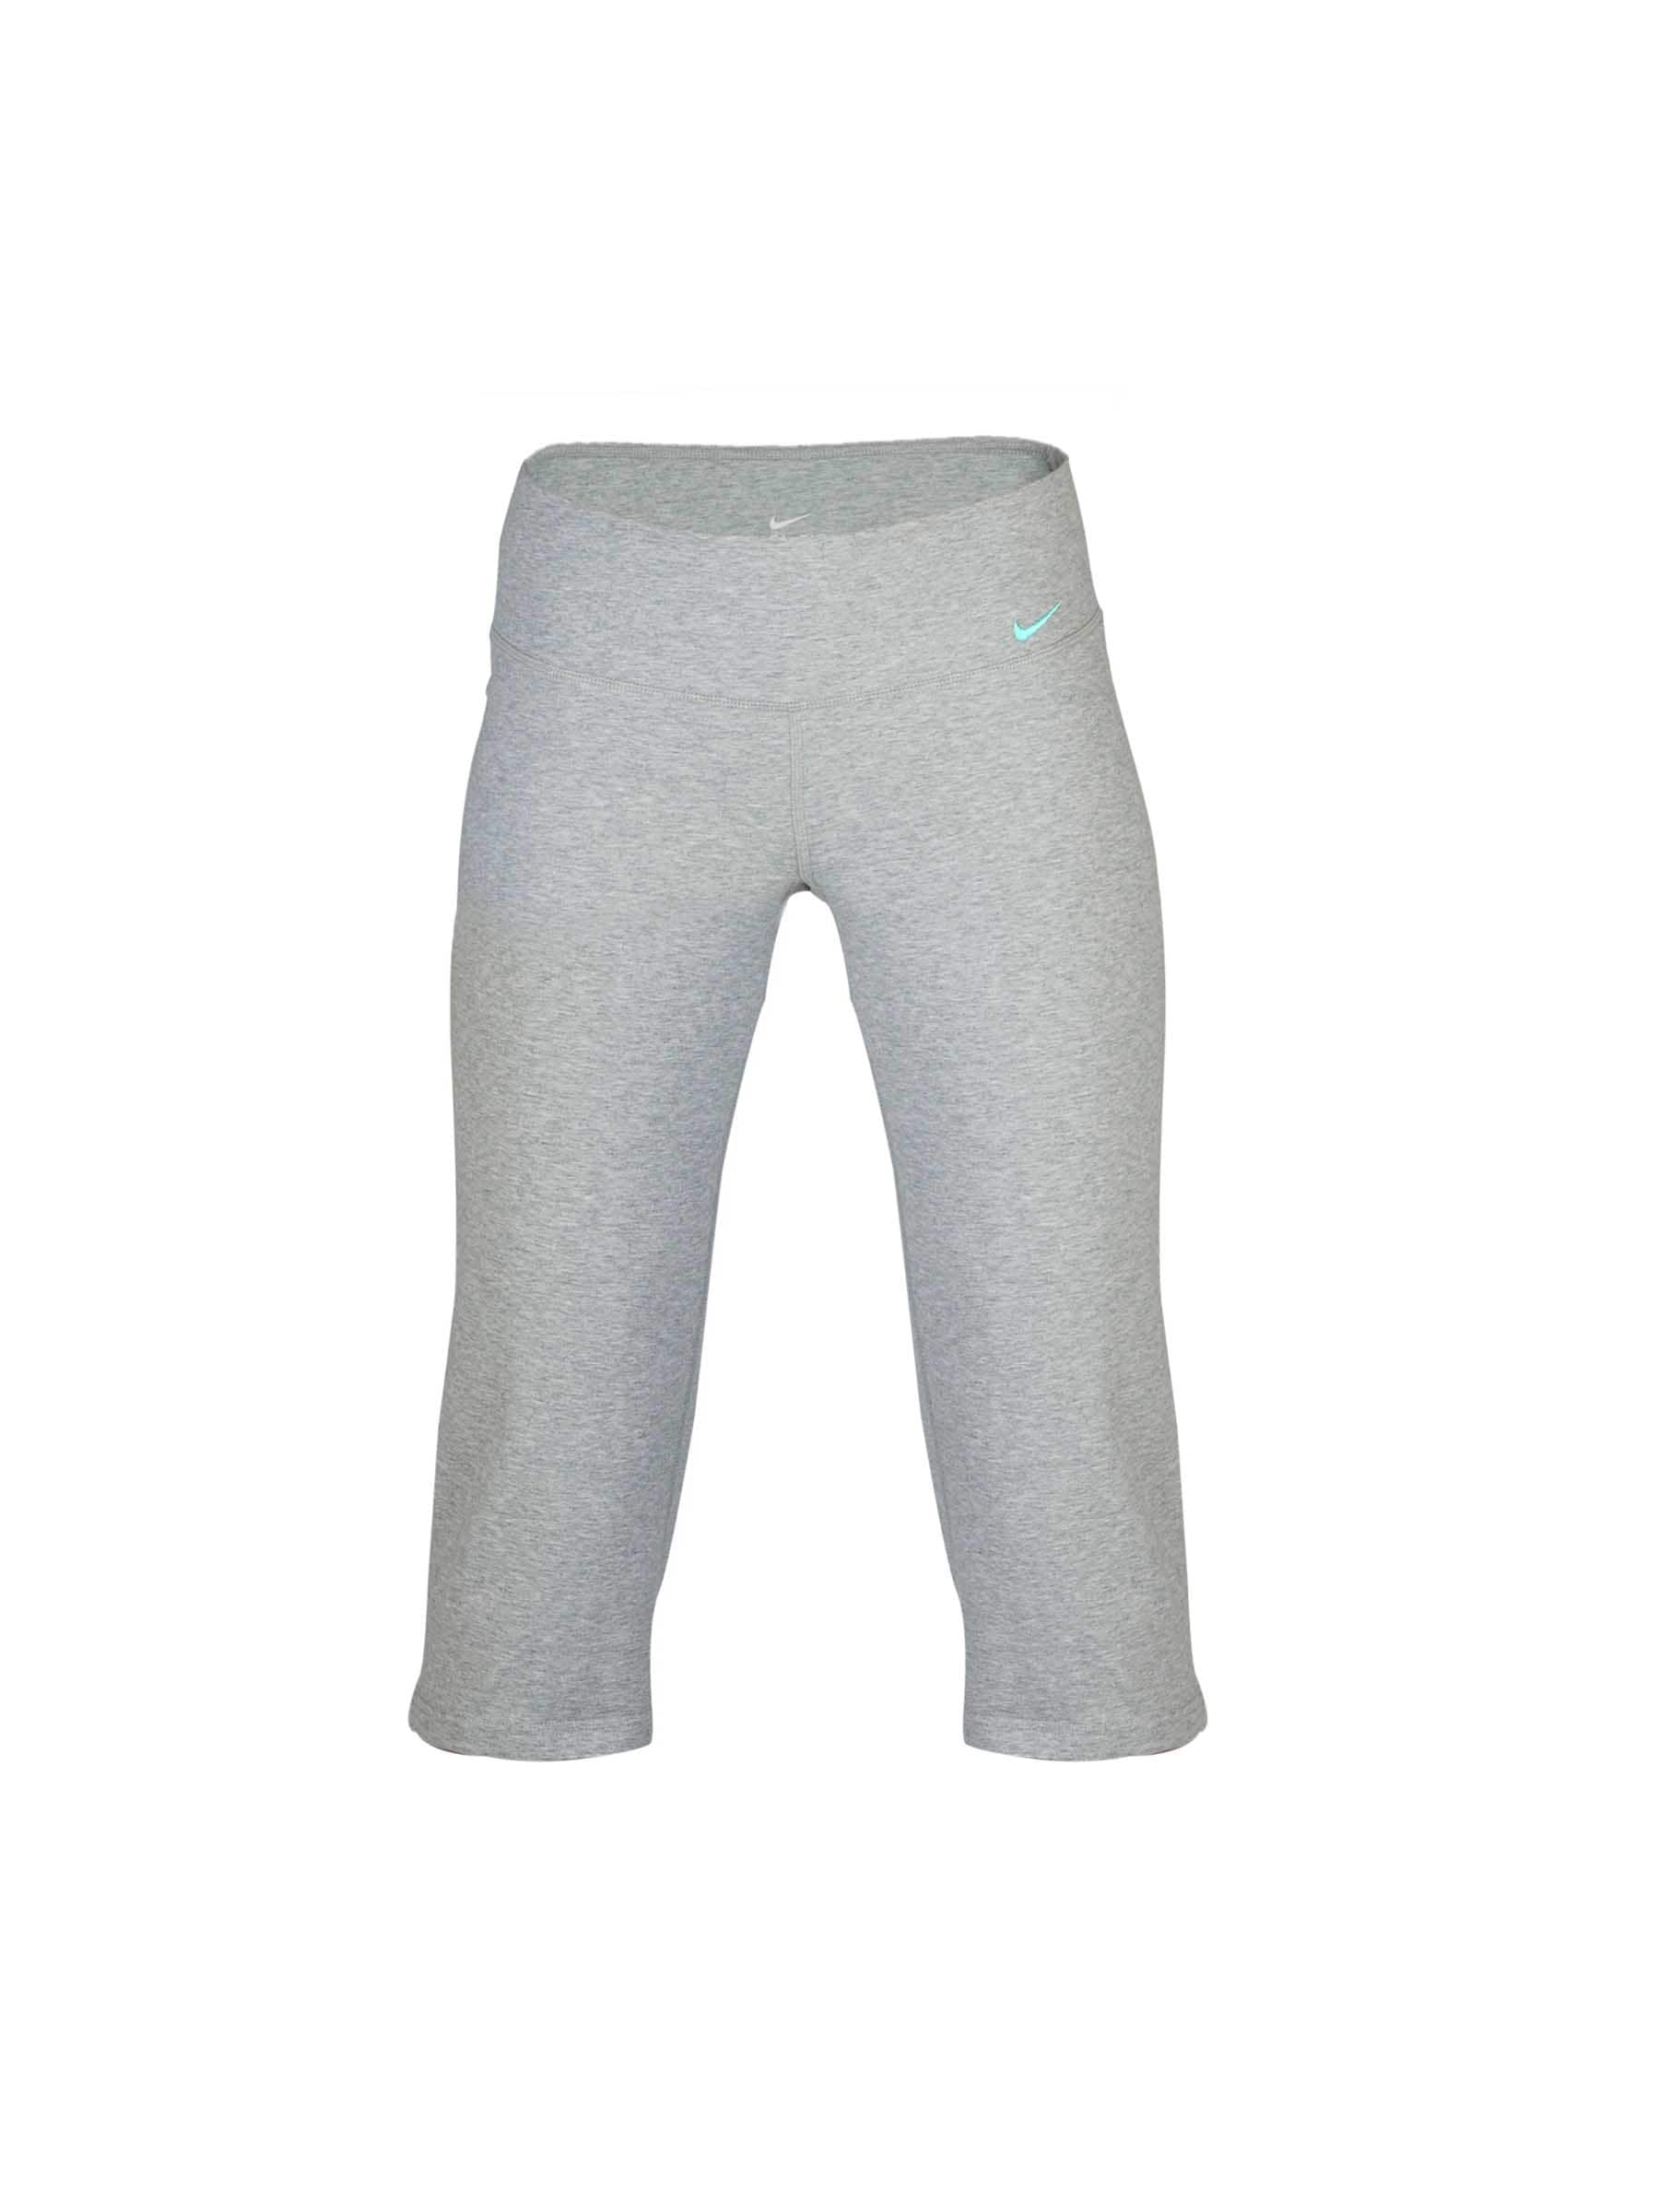 Nike Women Regular Grey Capris